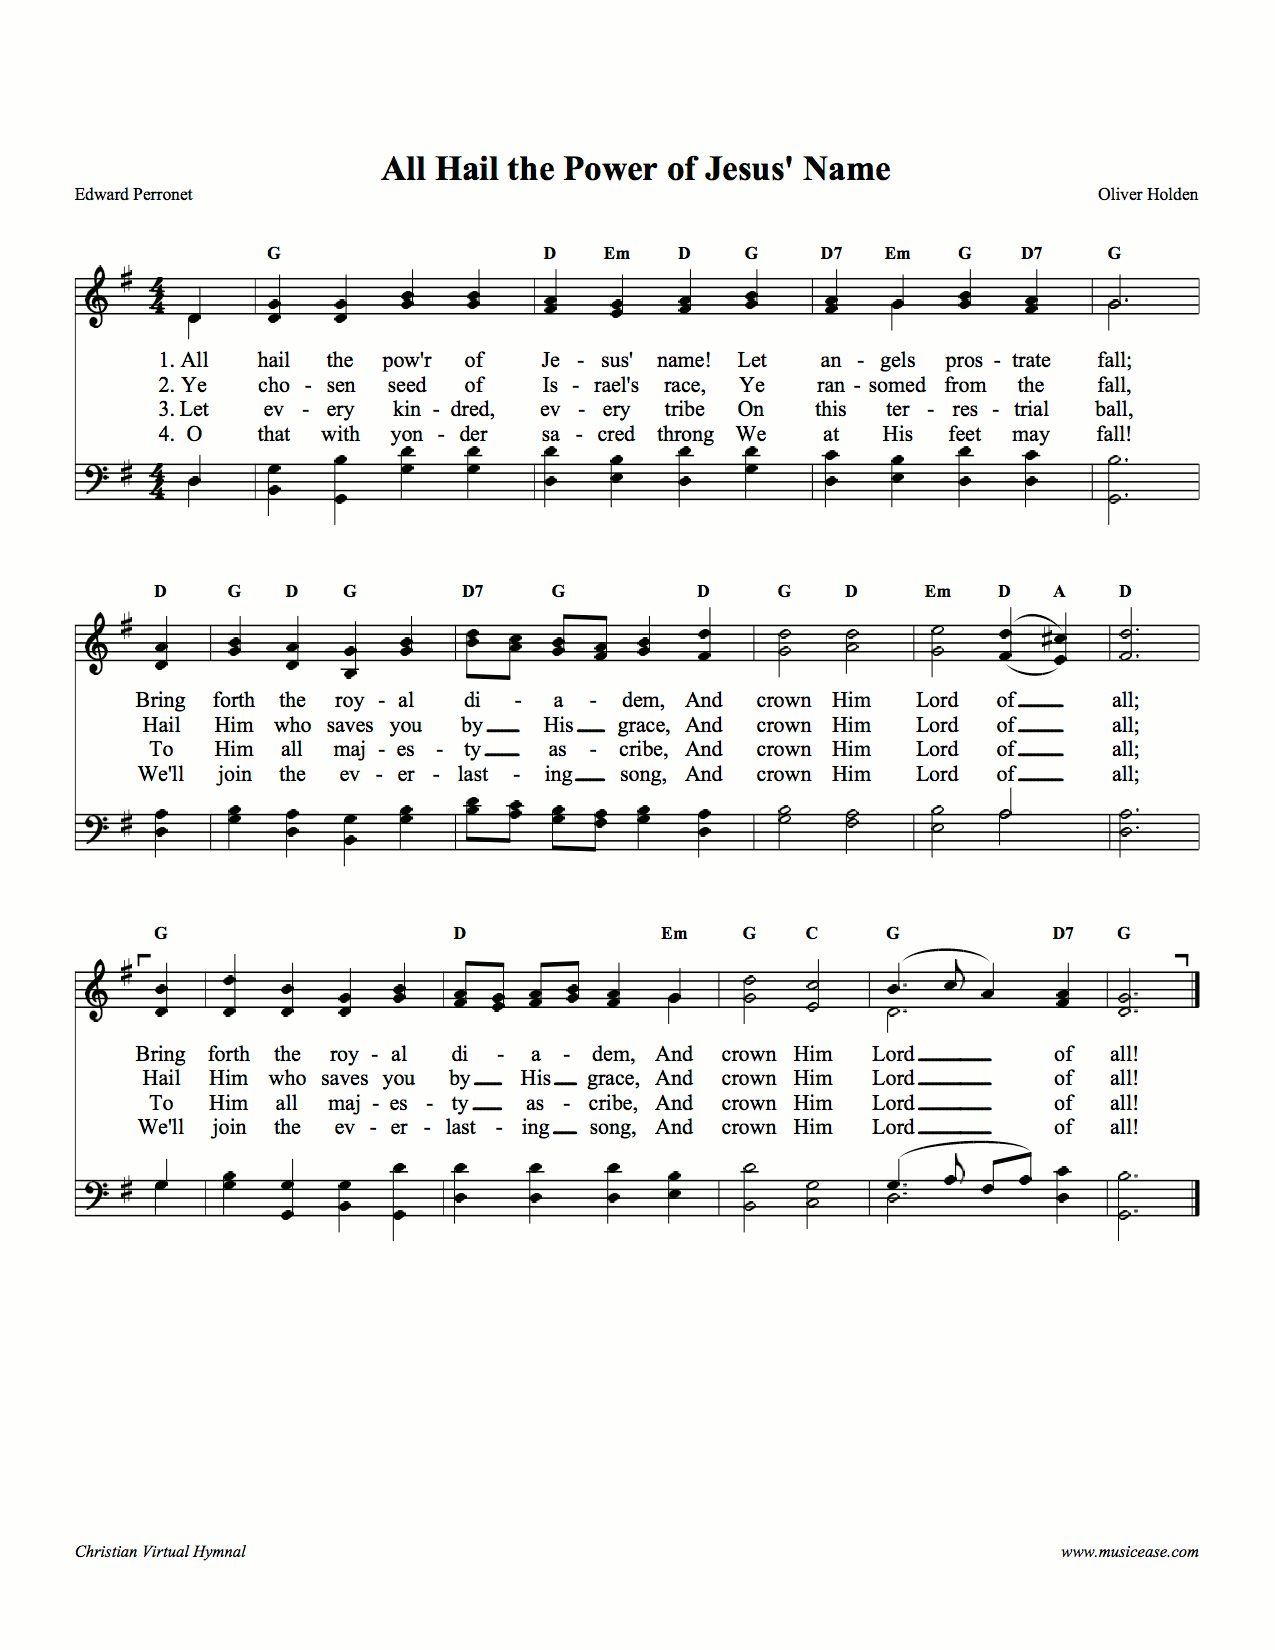 Standard SATB Hymn